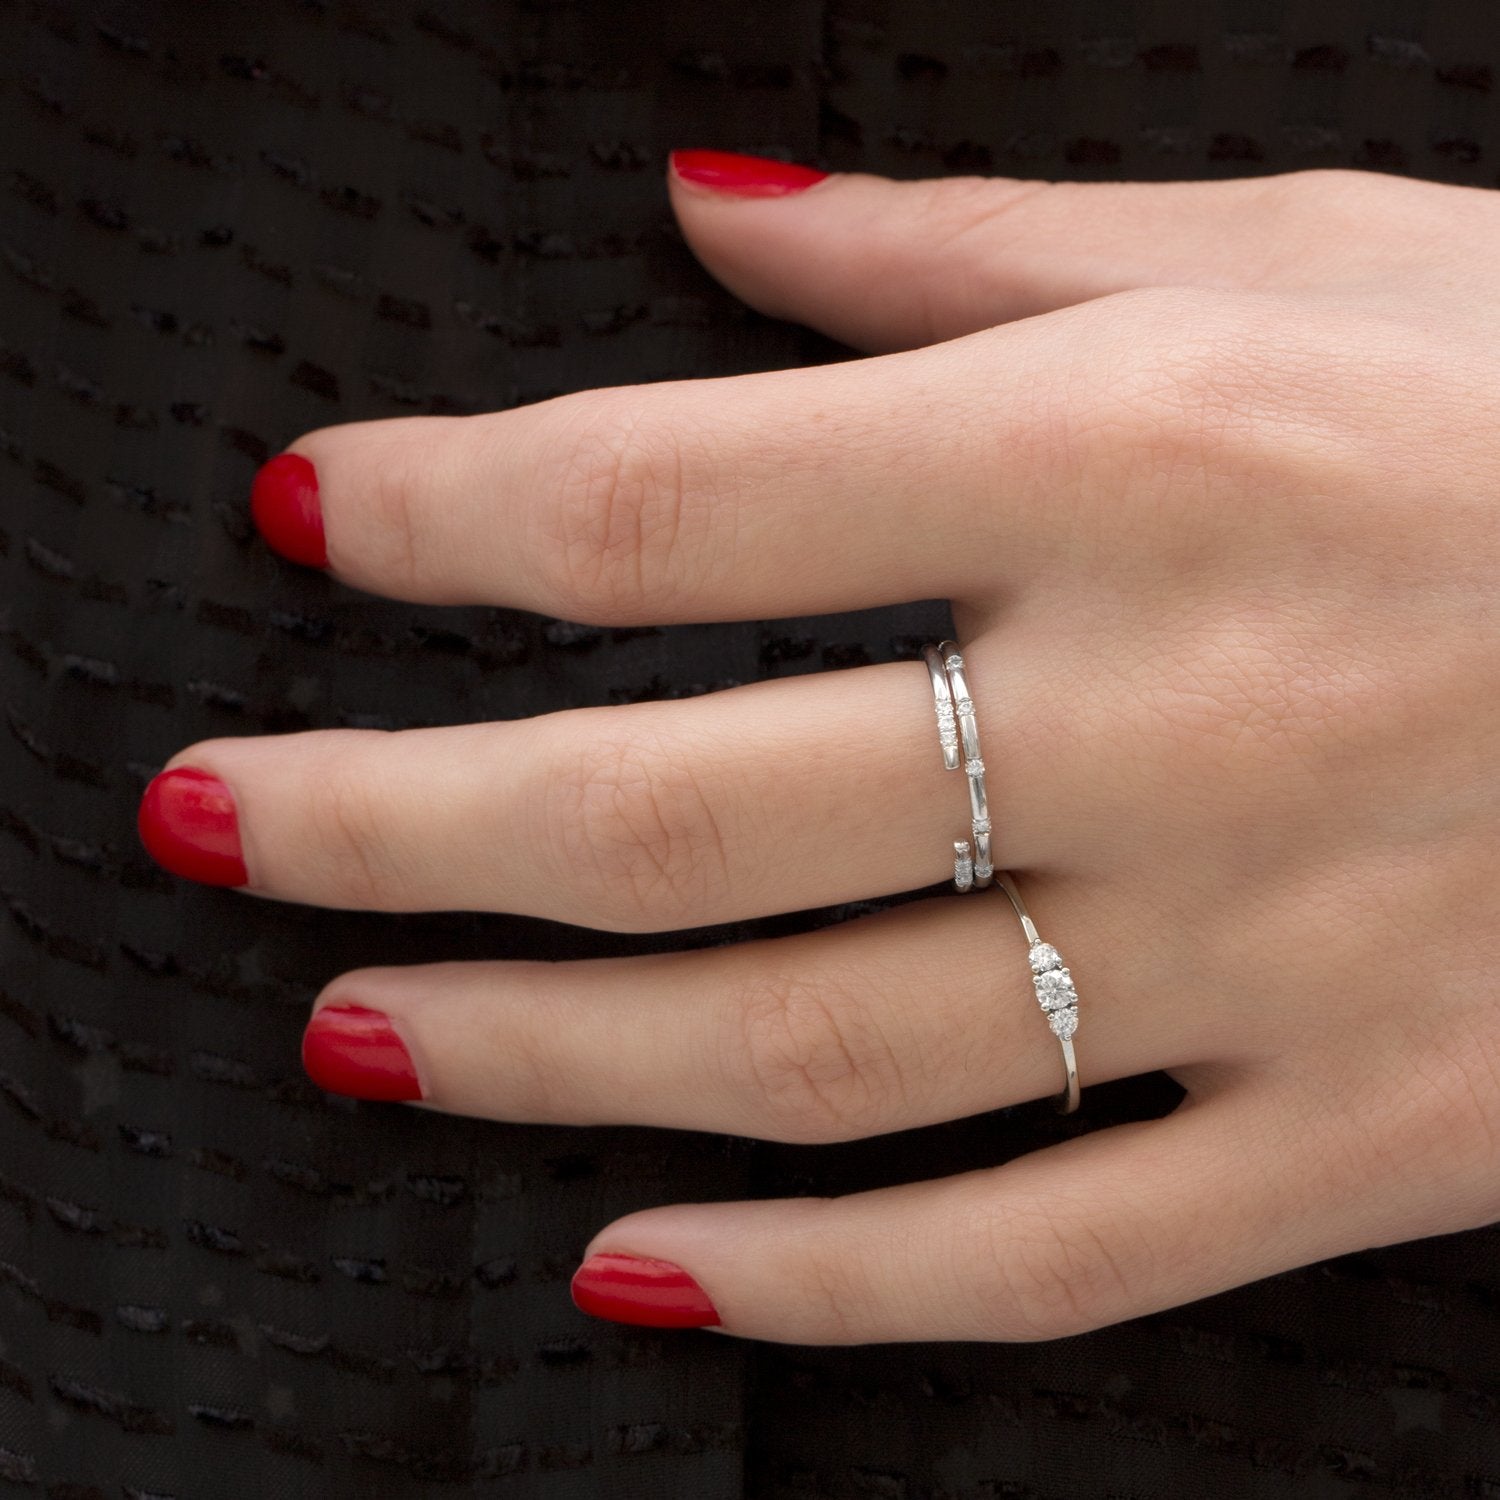 Audrey Gold Ring 3mm Diamond